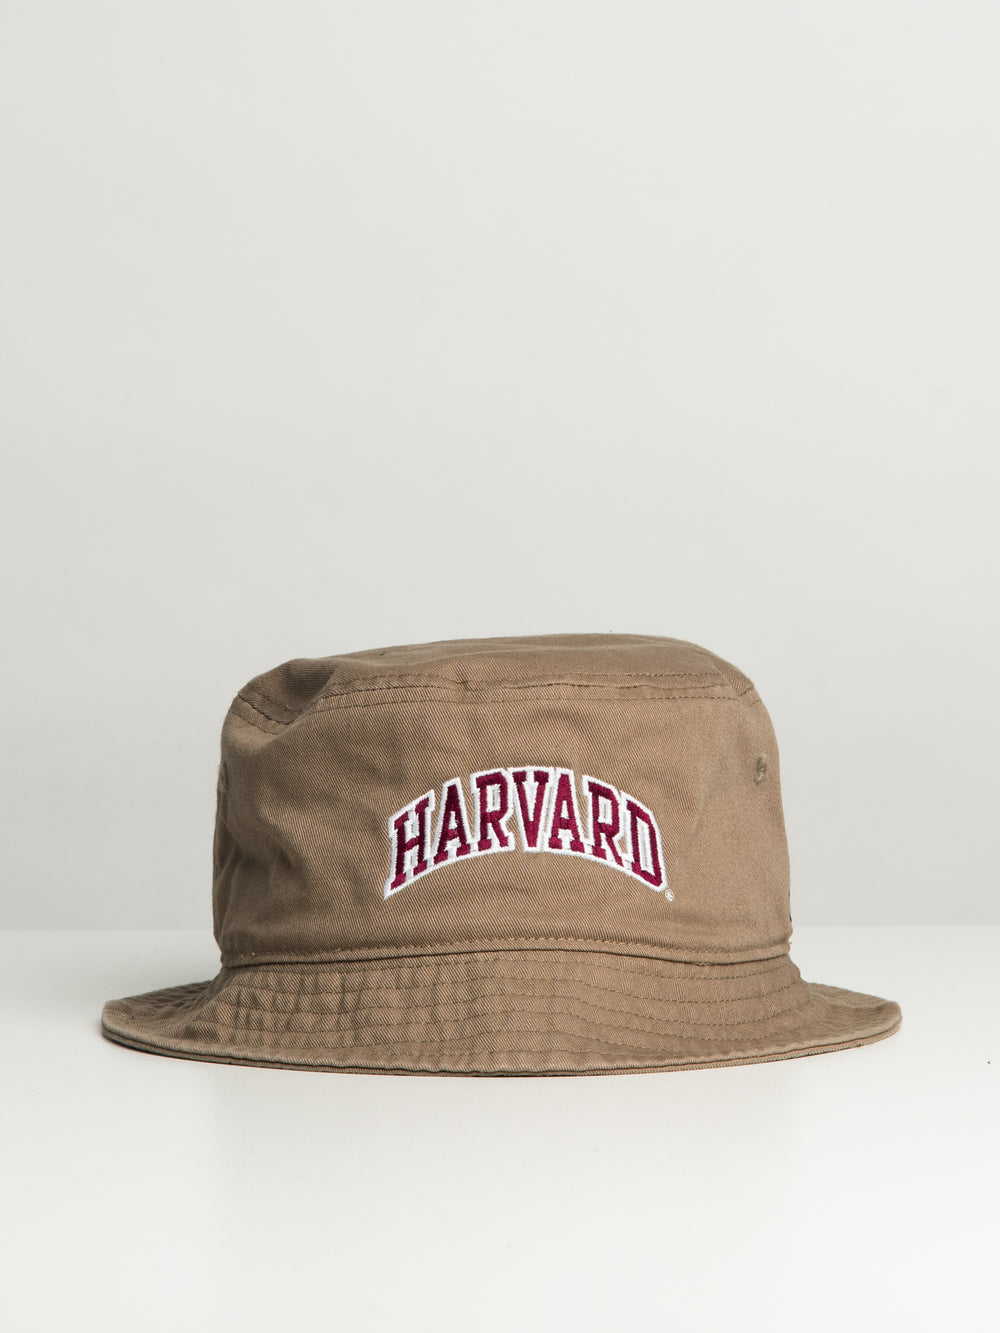 CHAMPION HARVARD BUCKET HAT - CLEARANCE